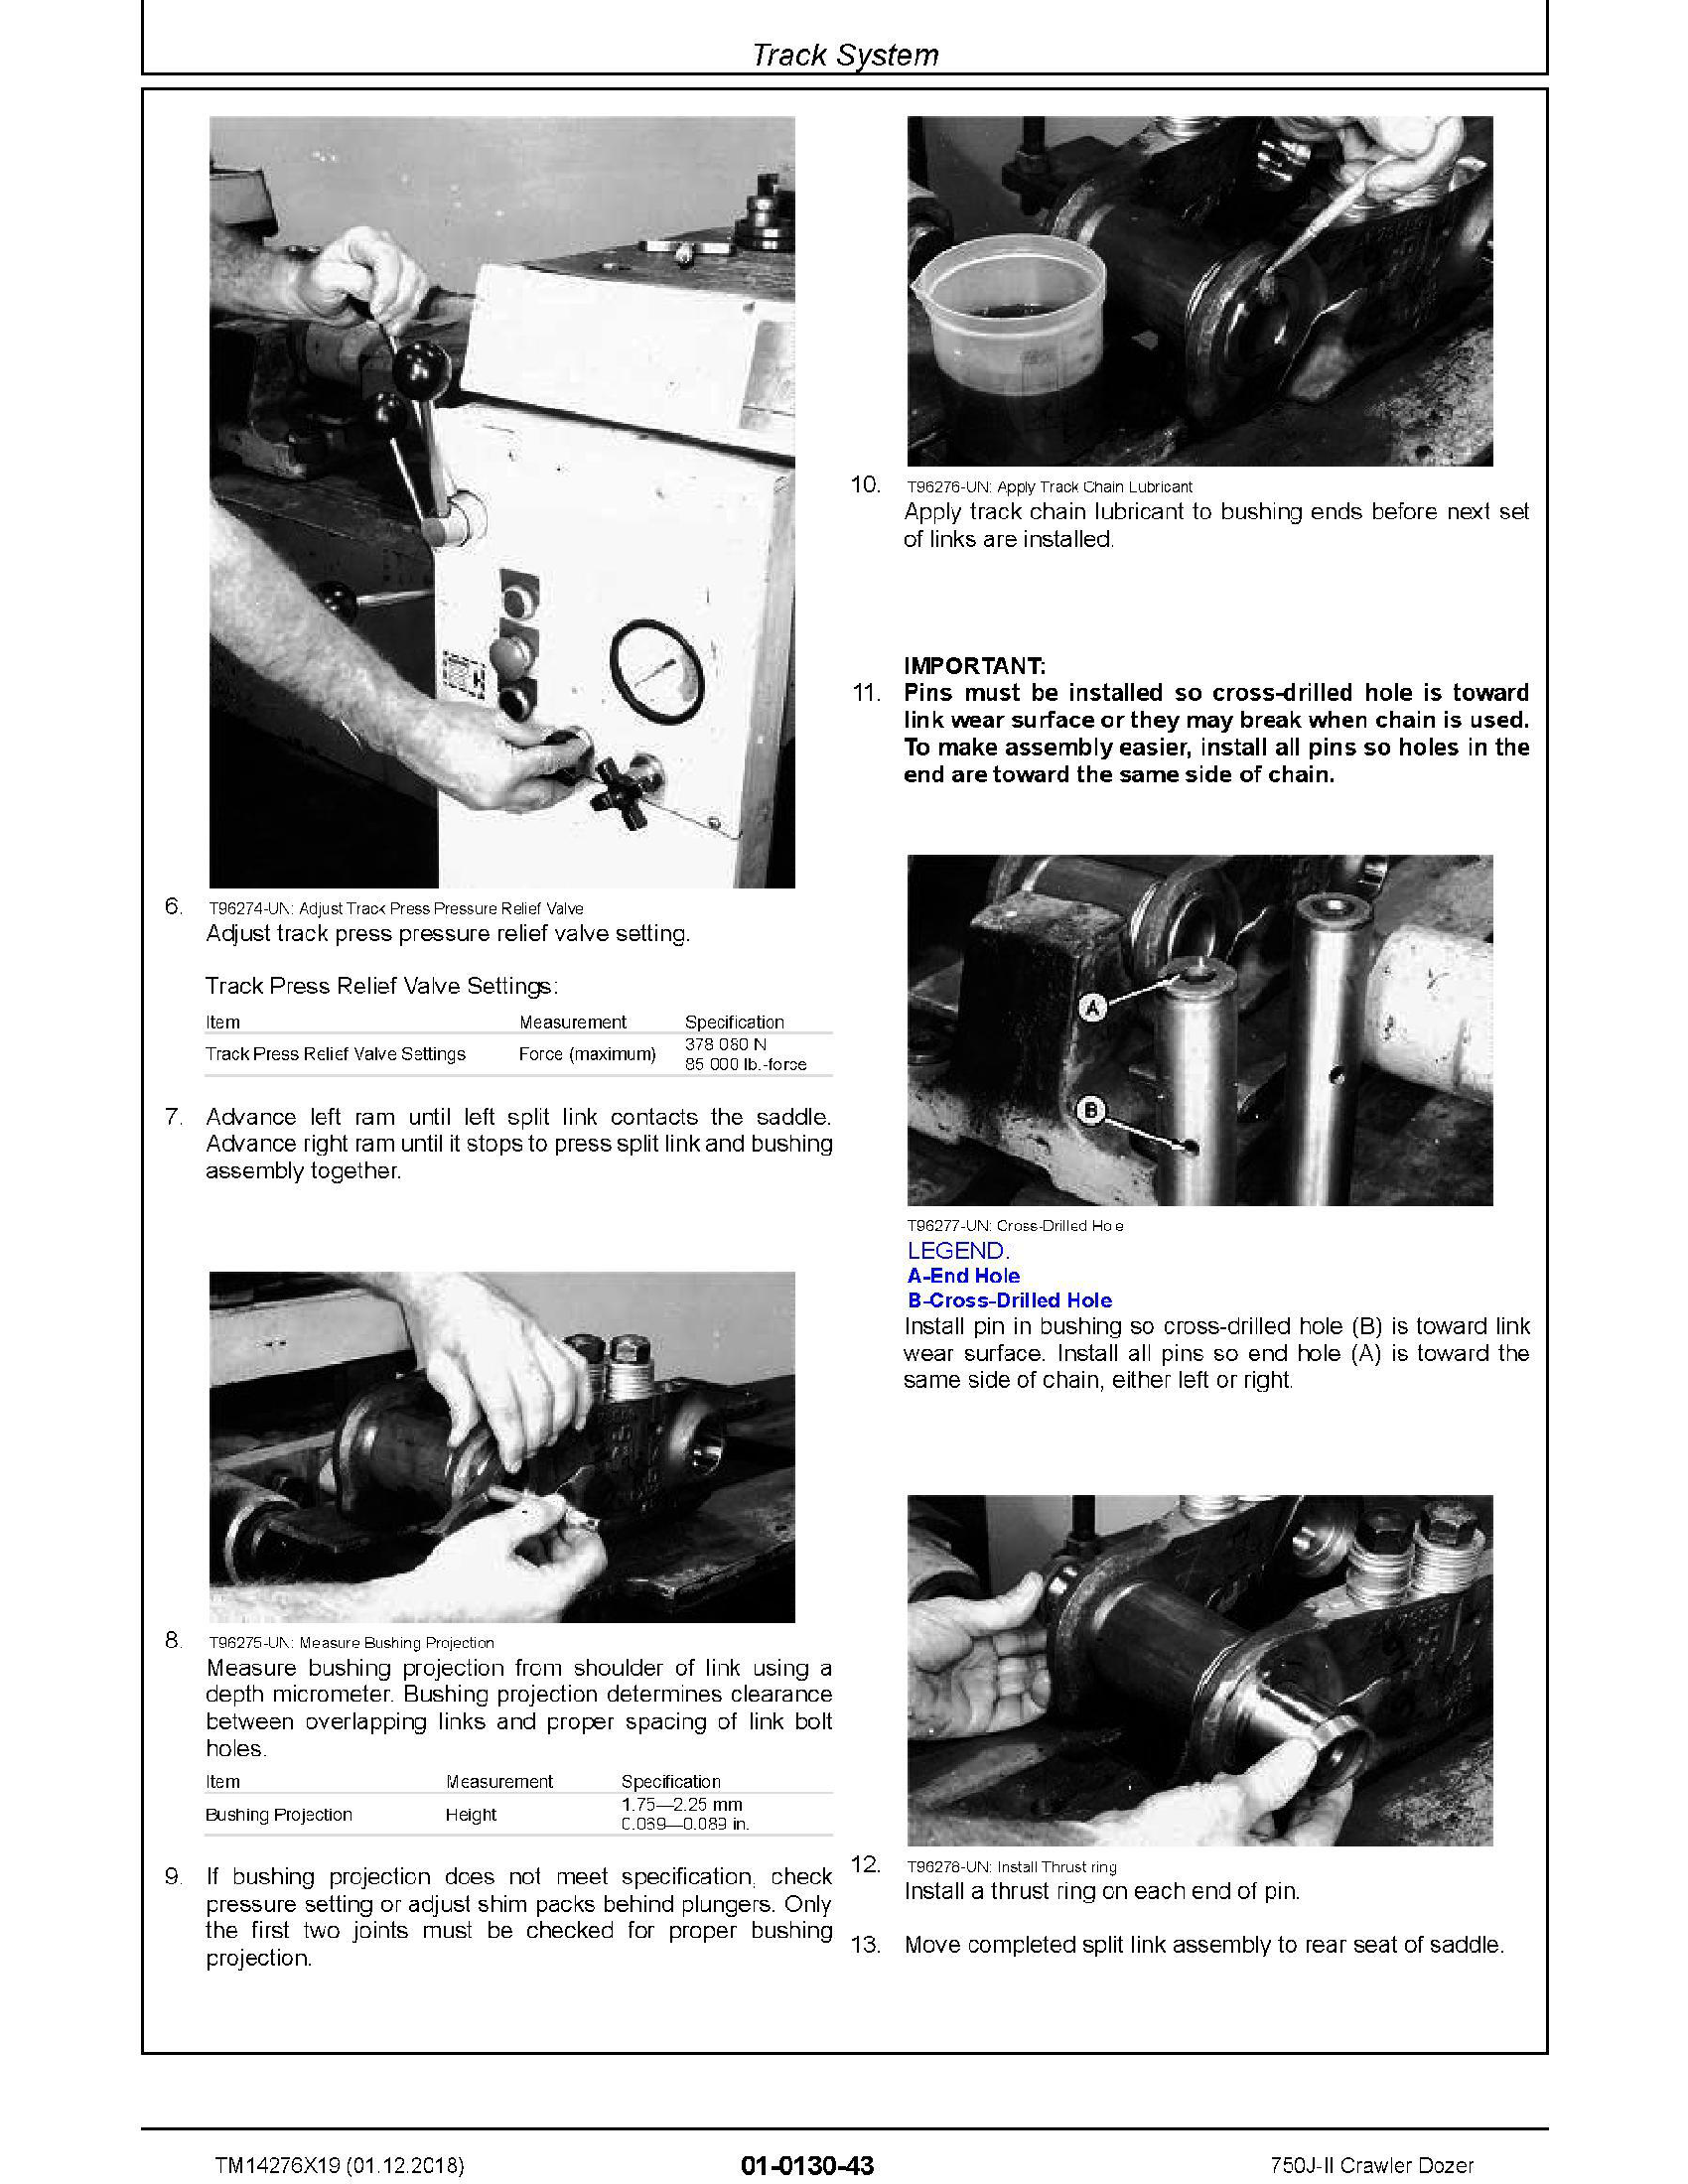 John Deere 1BZ750JA manual pdf